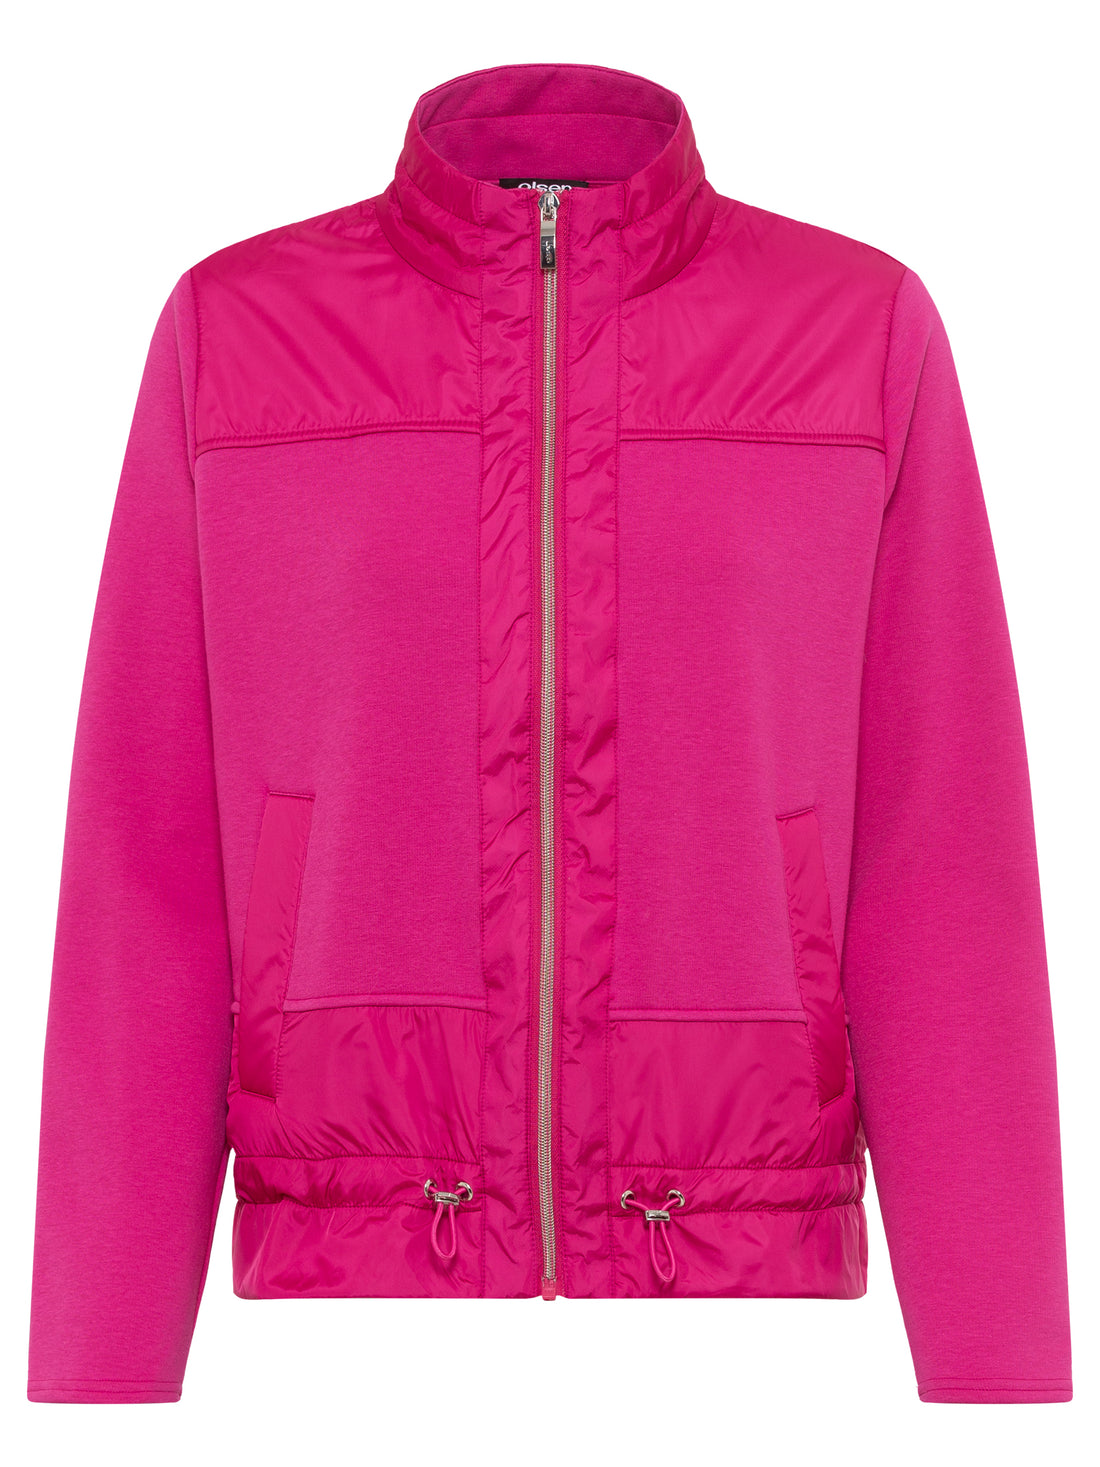 Olsen - Mixed Media Zip Front Jacket Vivid Hot Pink